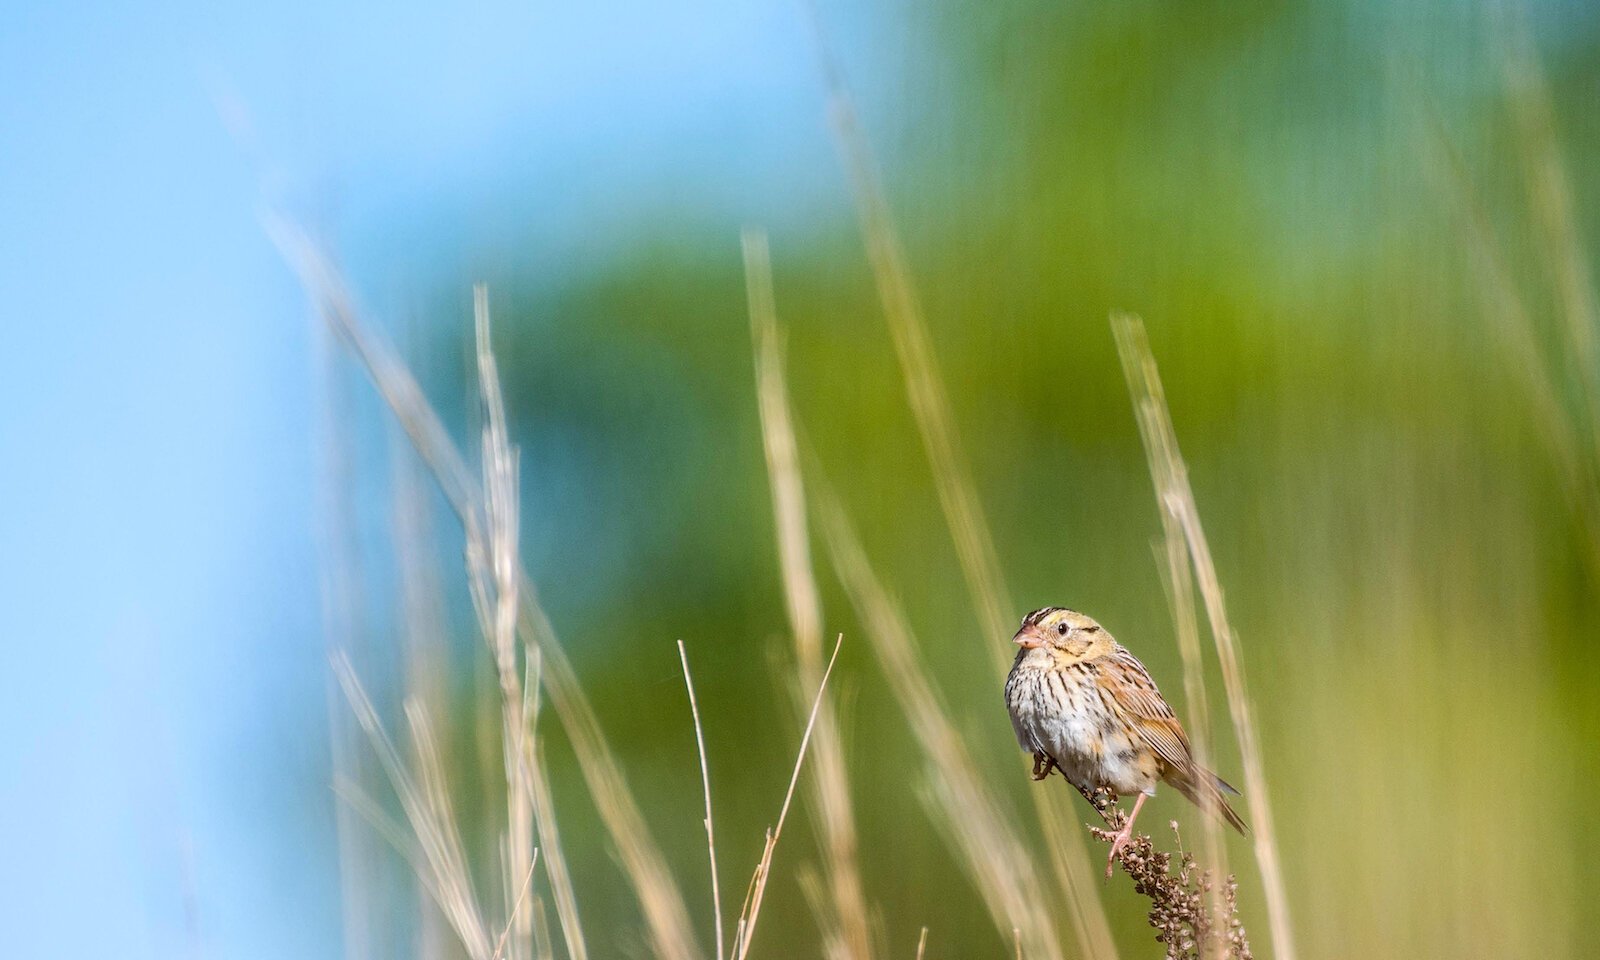 Henslow’s Sparrow. Photo by Delmar Bachert.